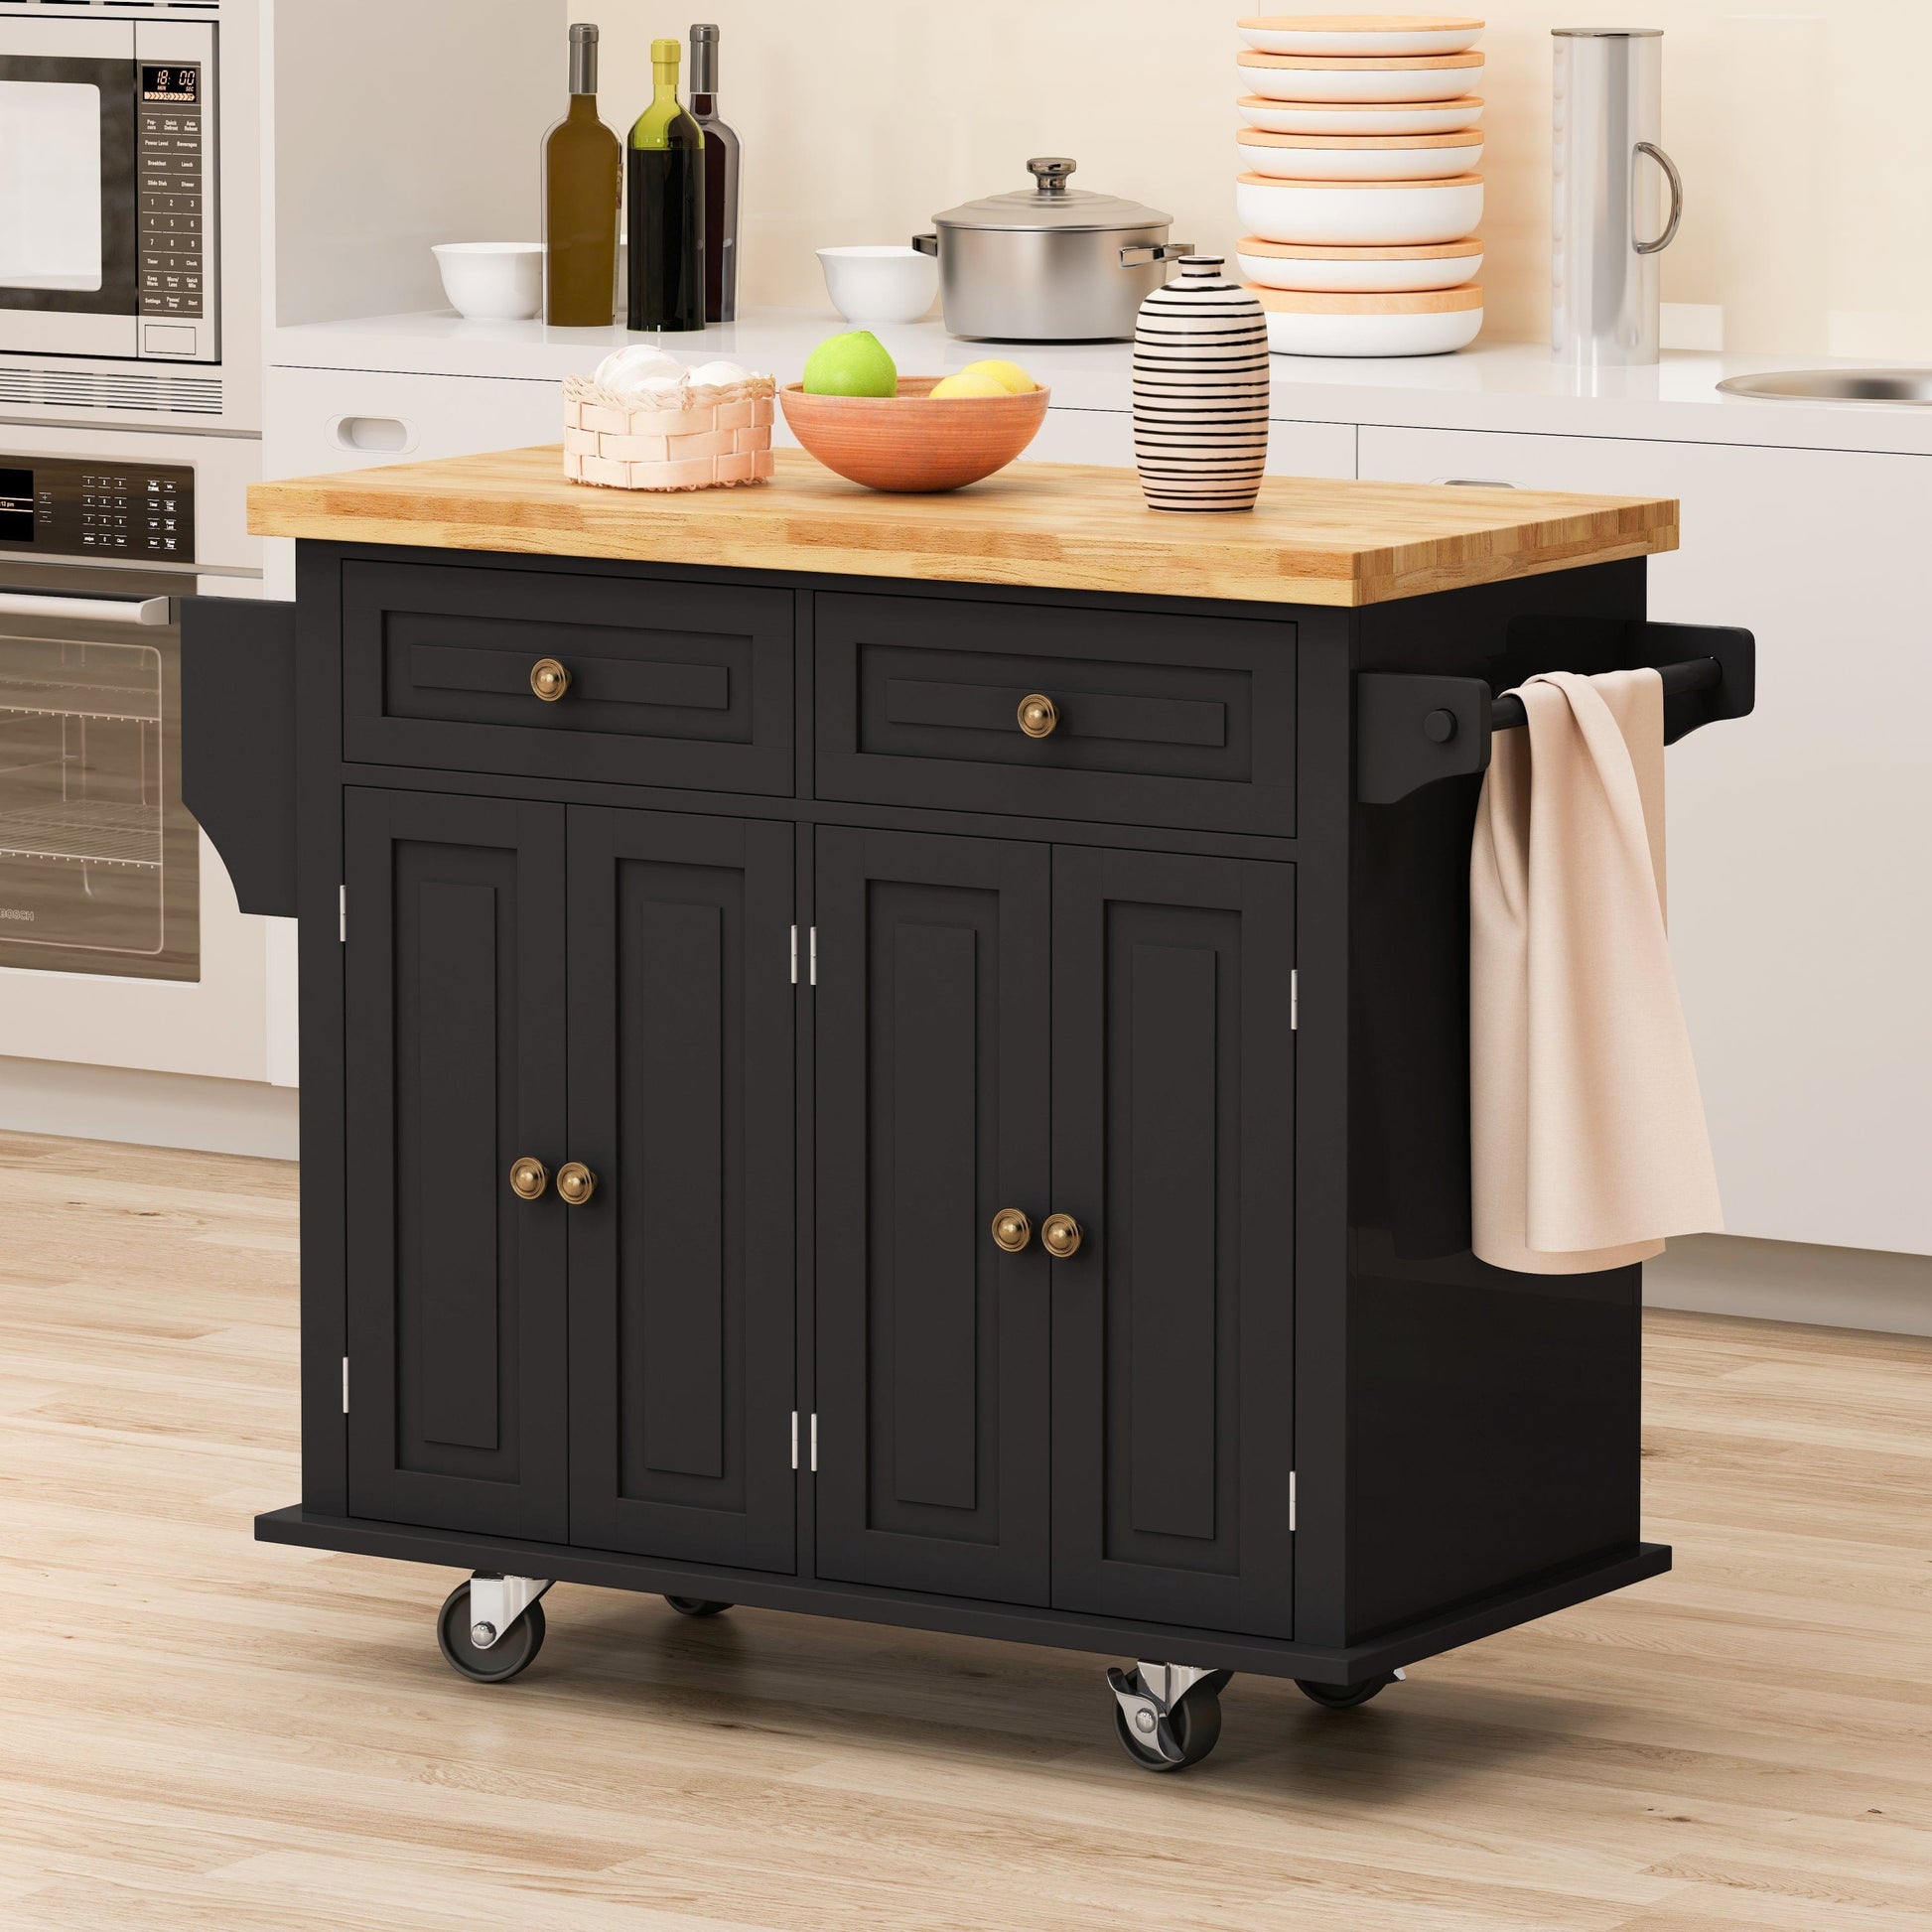 1st Choice Furniture Direct Kitchen Island Cart 1st Choice Black Kitchen Island Cart w/ Storage Cabinets, Spice Rack